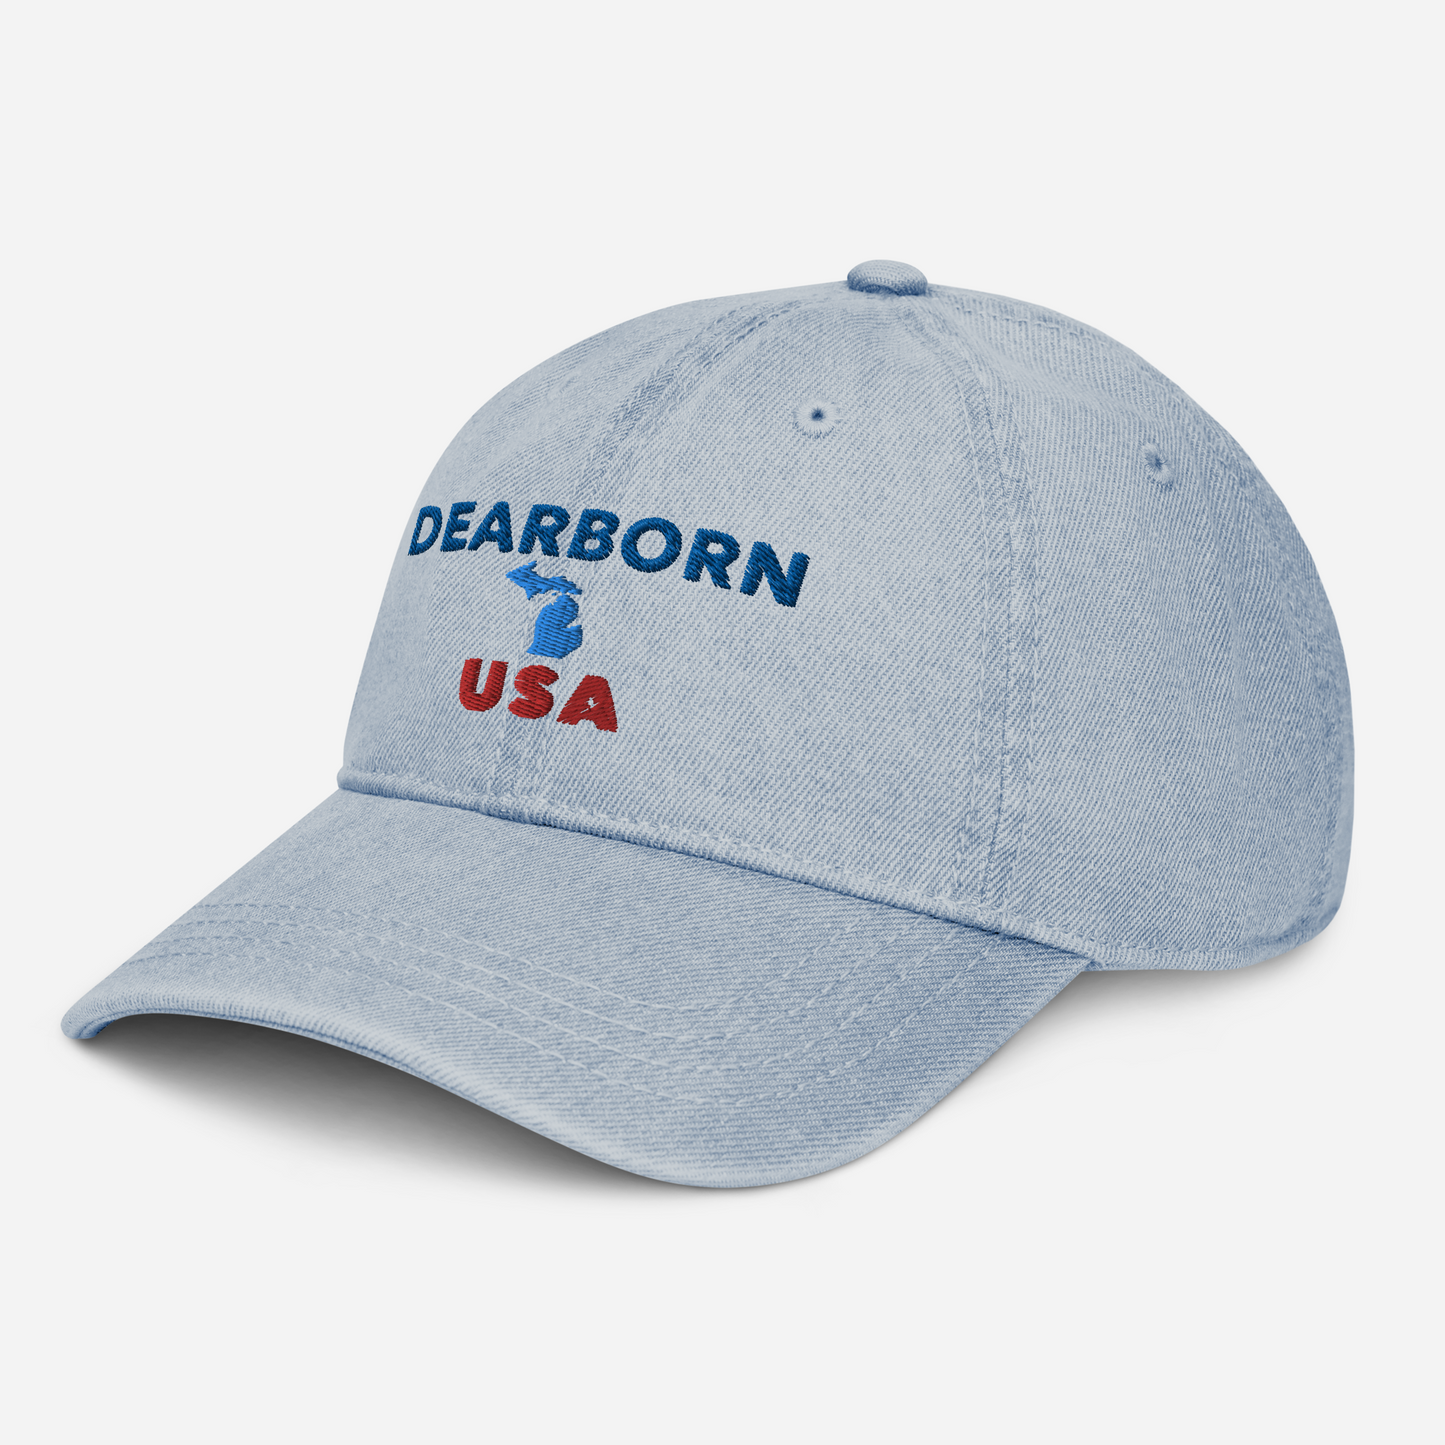 'Dearborn USA' Denim Baseball Cap (w/ Michigan Outline)